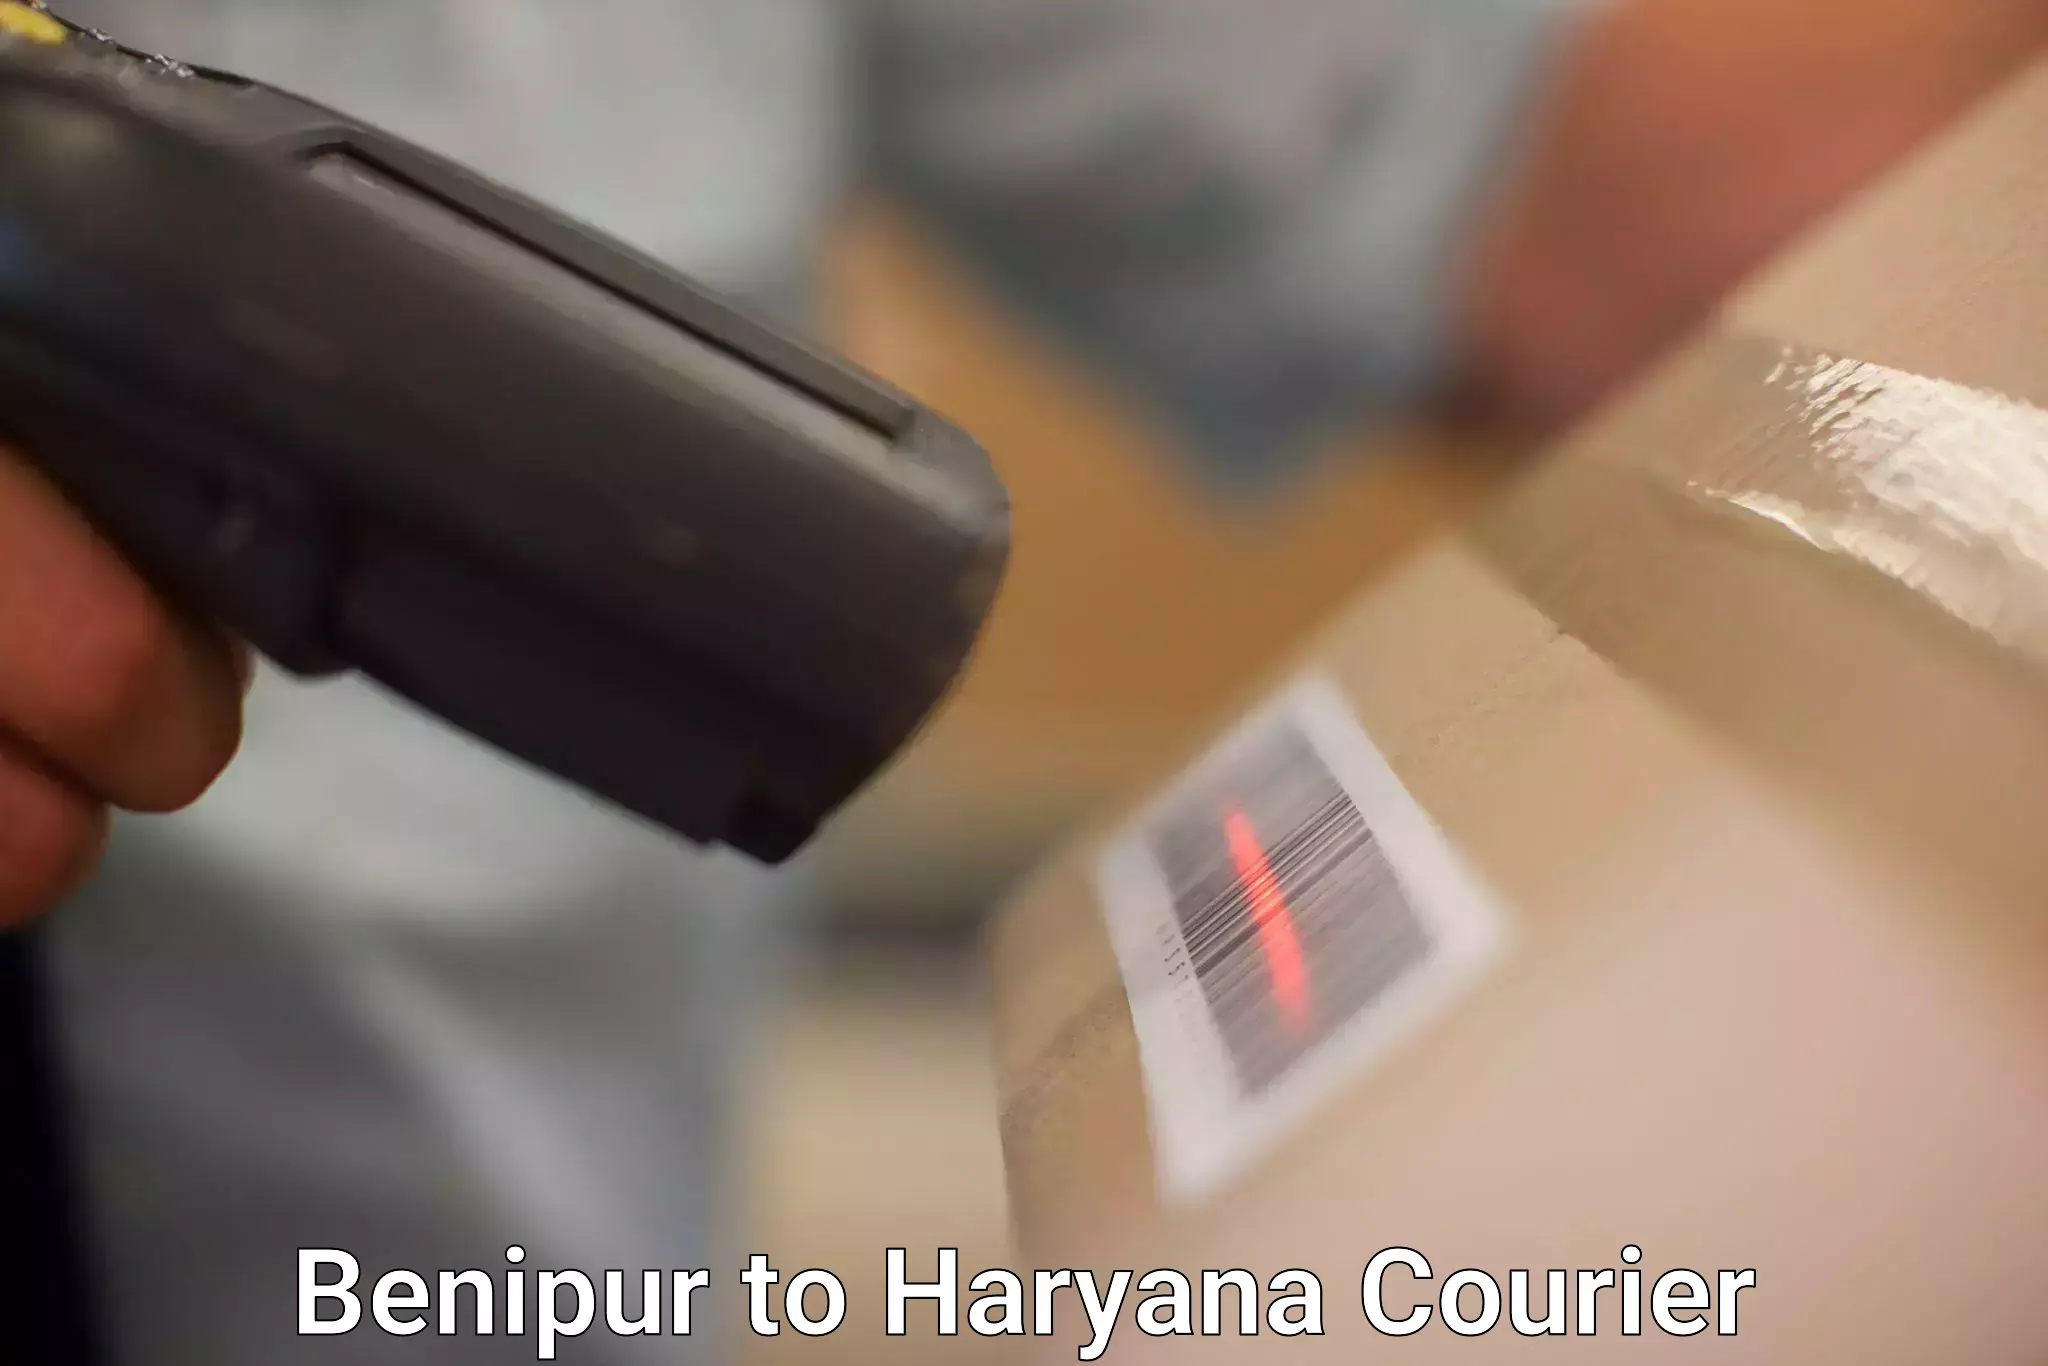 Courier service partnerships Benipur to Gurugram